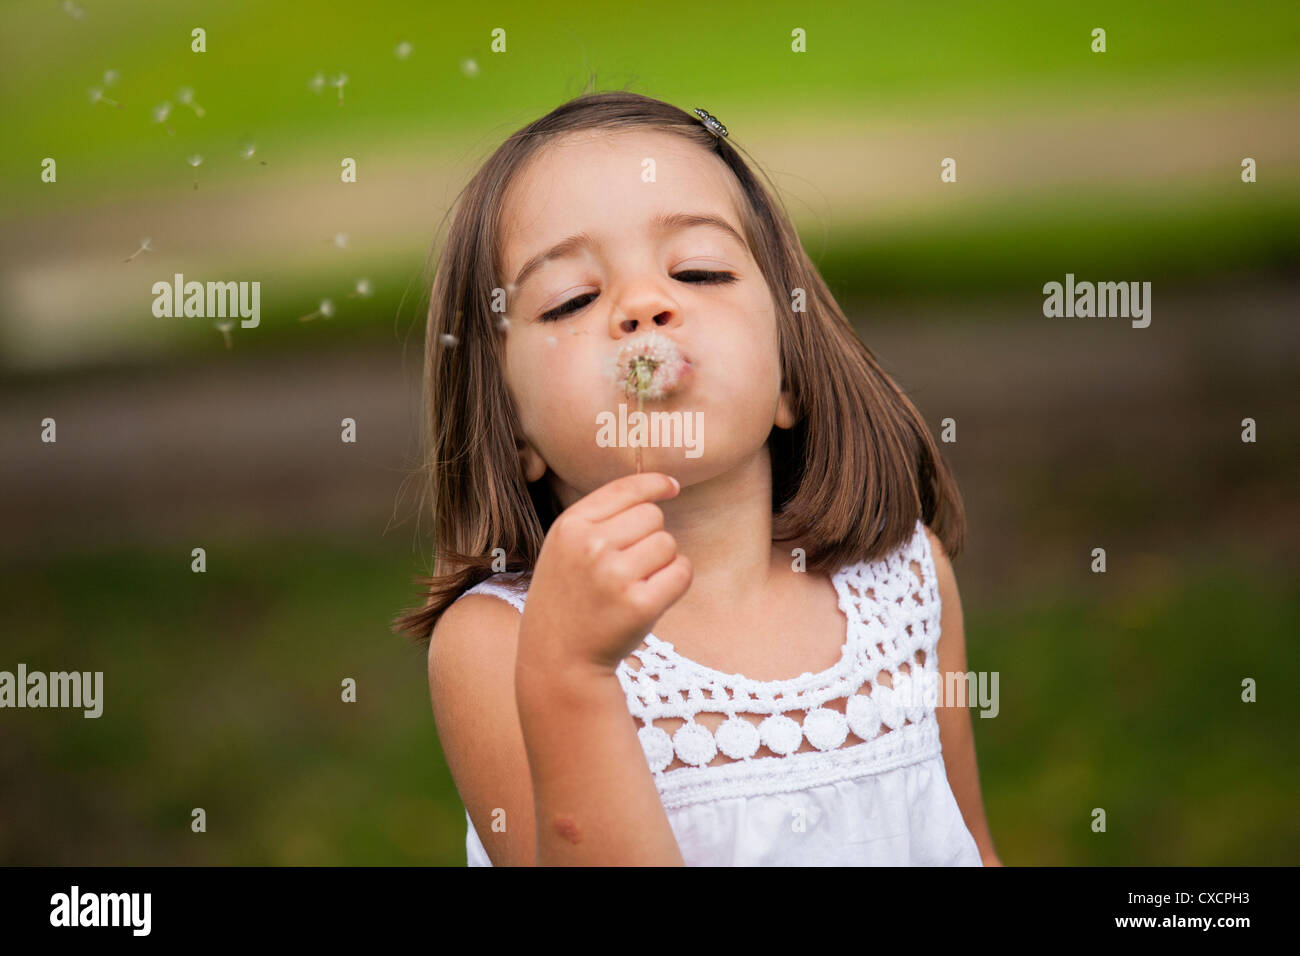 Mixed race girl blowing dandelion seeds Stock Photo